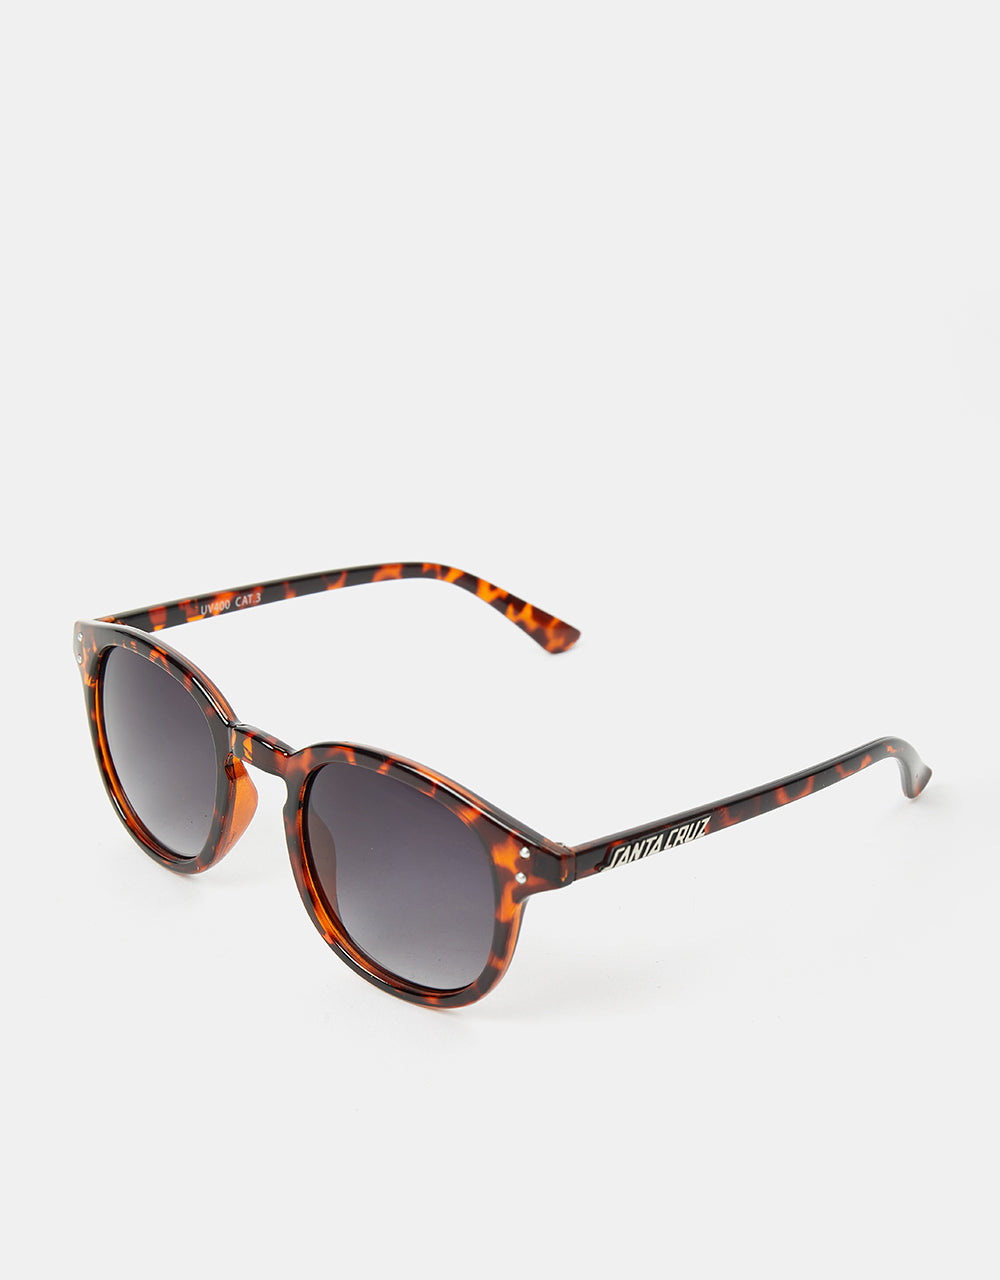 Santa Cruz Watson Sunglasses - Tortoiseshell